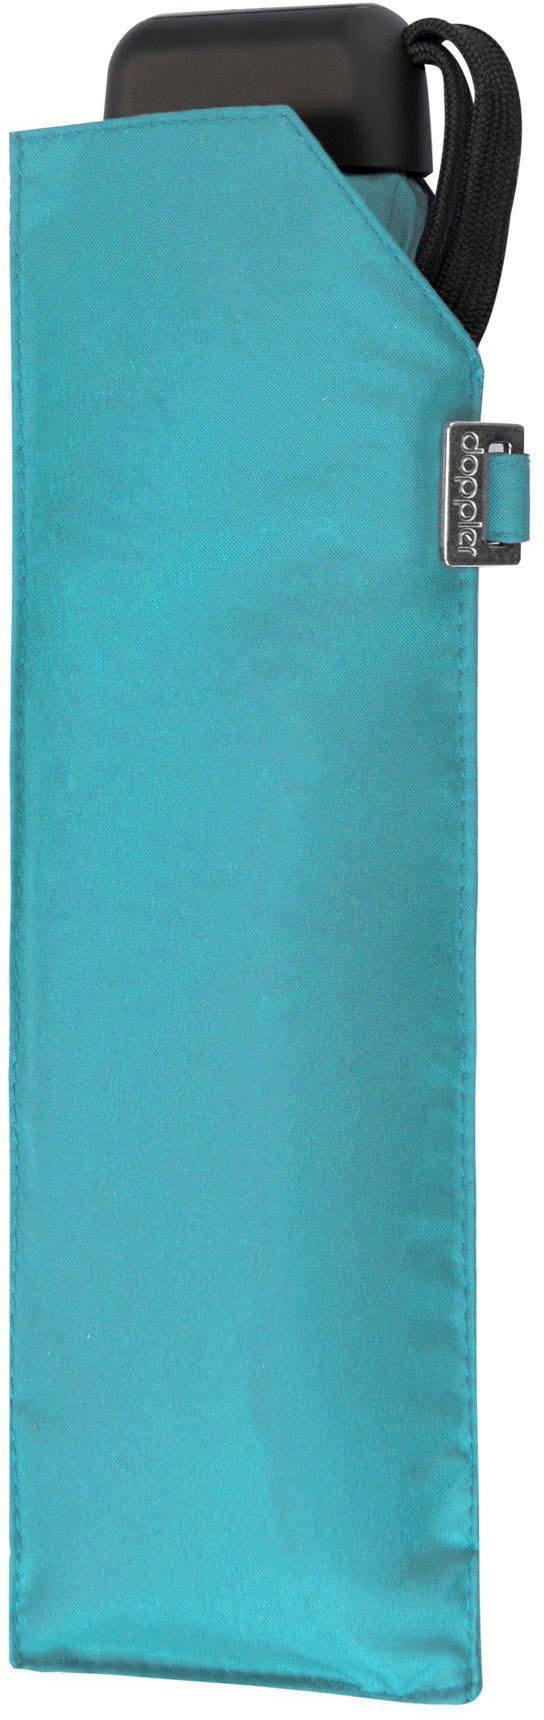 Carbonsteel Slim uni, summer doppler® Taschenregenschirm blue